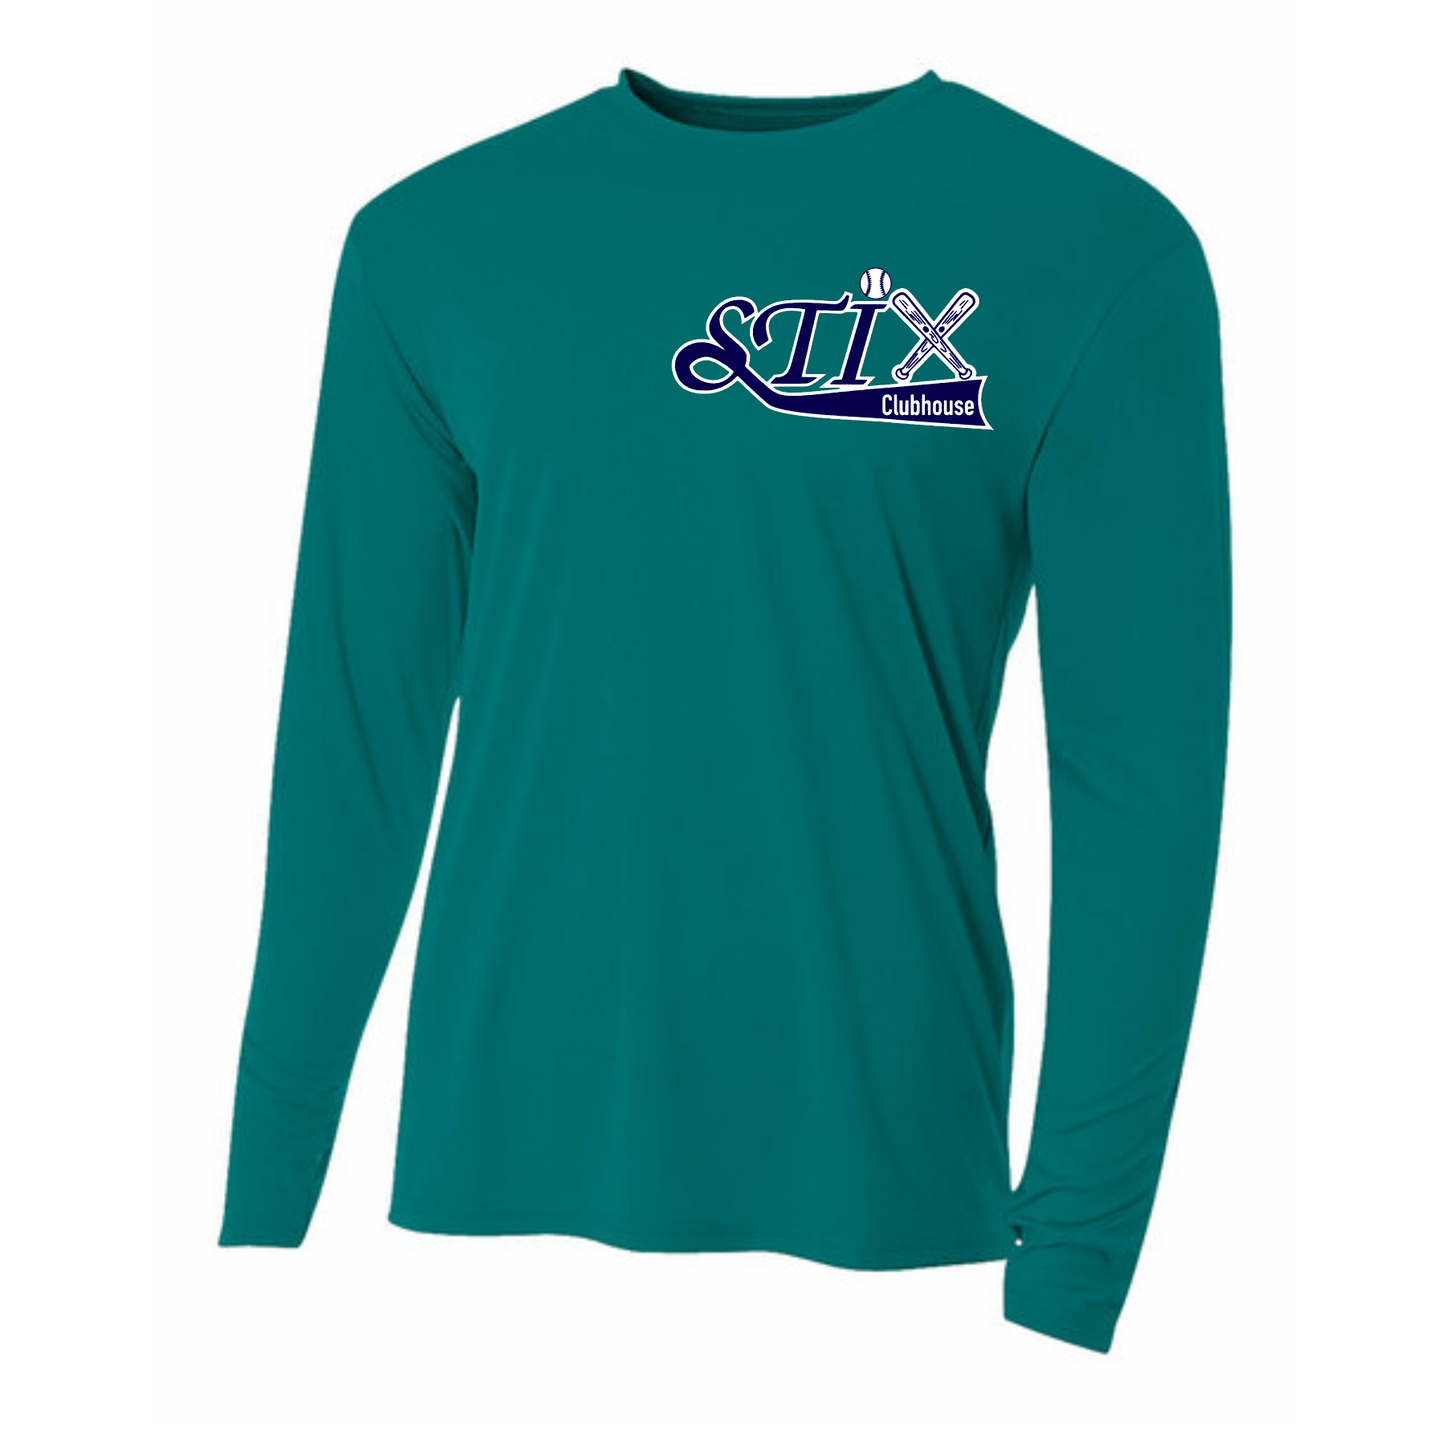 Teal Stix Clubhouse Softball Tee, Long Sleeve STIX Softball Shirt